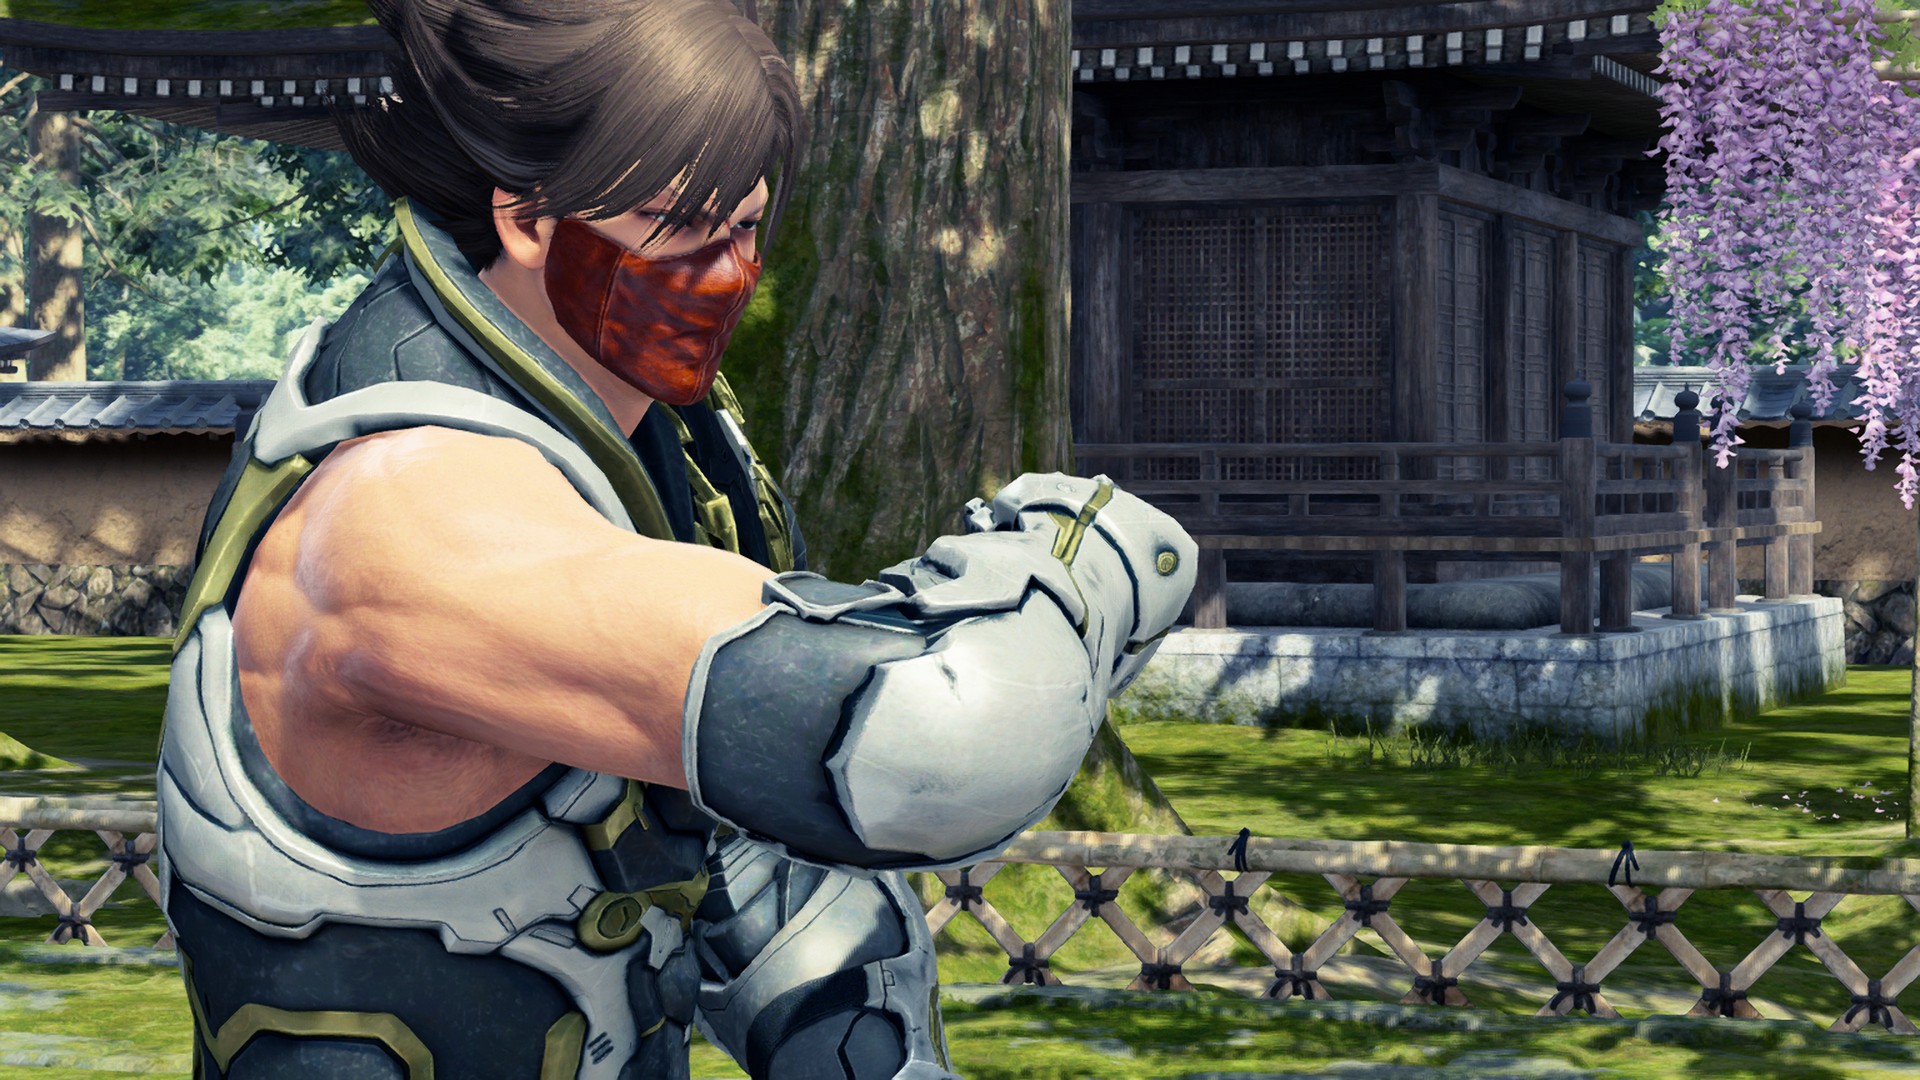 Virtua Fighter 5's Tekken costume collaboration DLC launches tomorrow